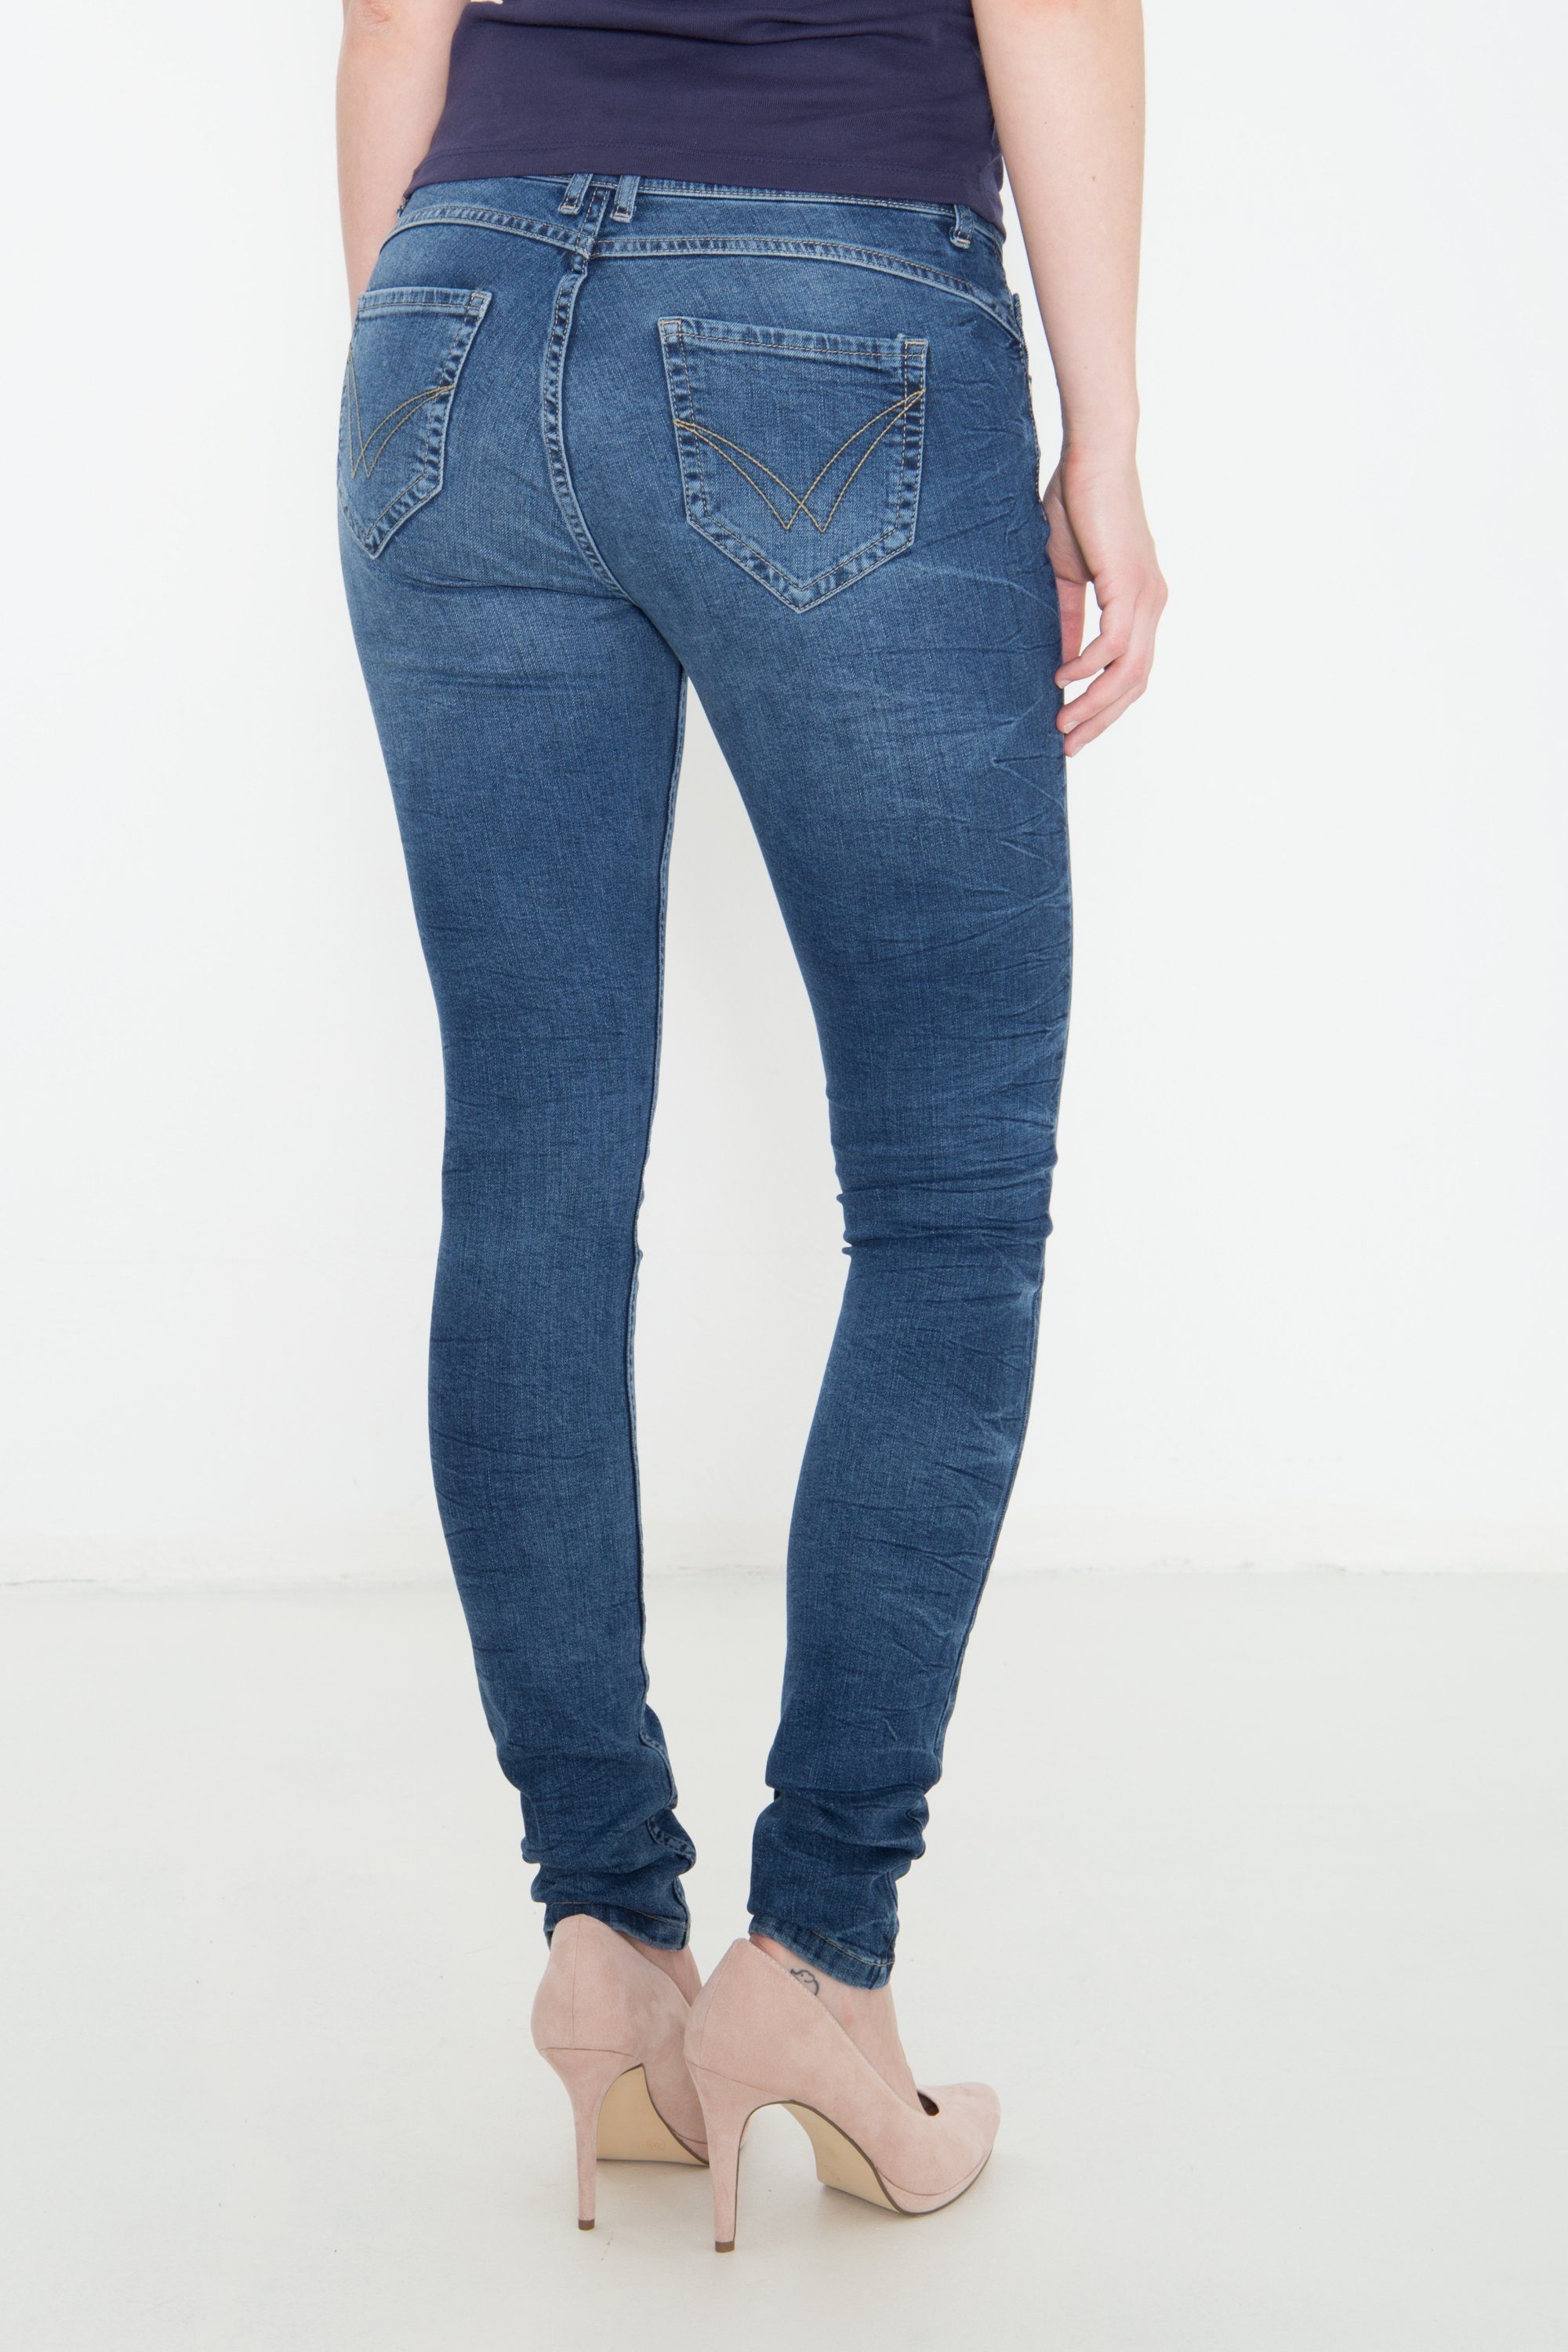 Damen Jeans Way of Glory 5-Pocket-Jeans Maria 5-pocket Basic Design in individueller Waschung